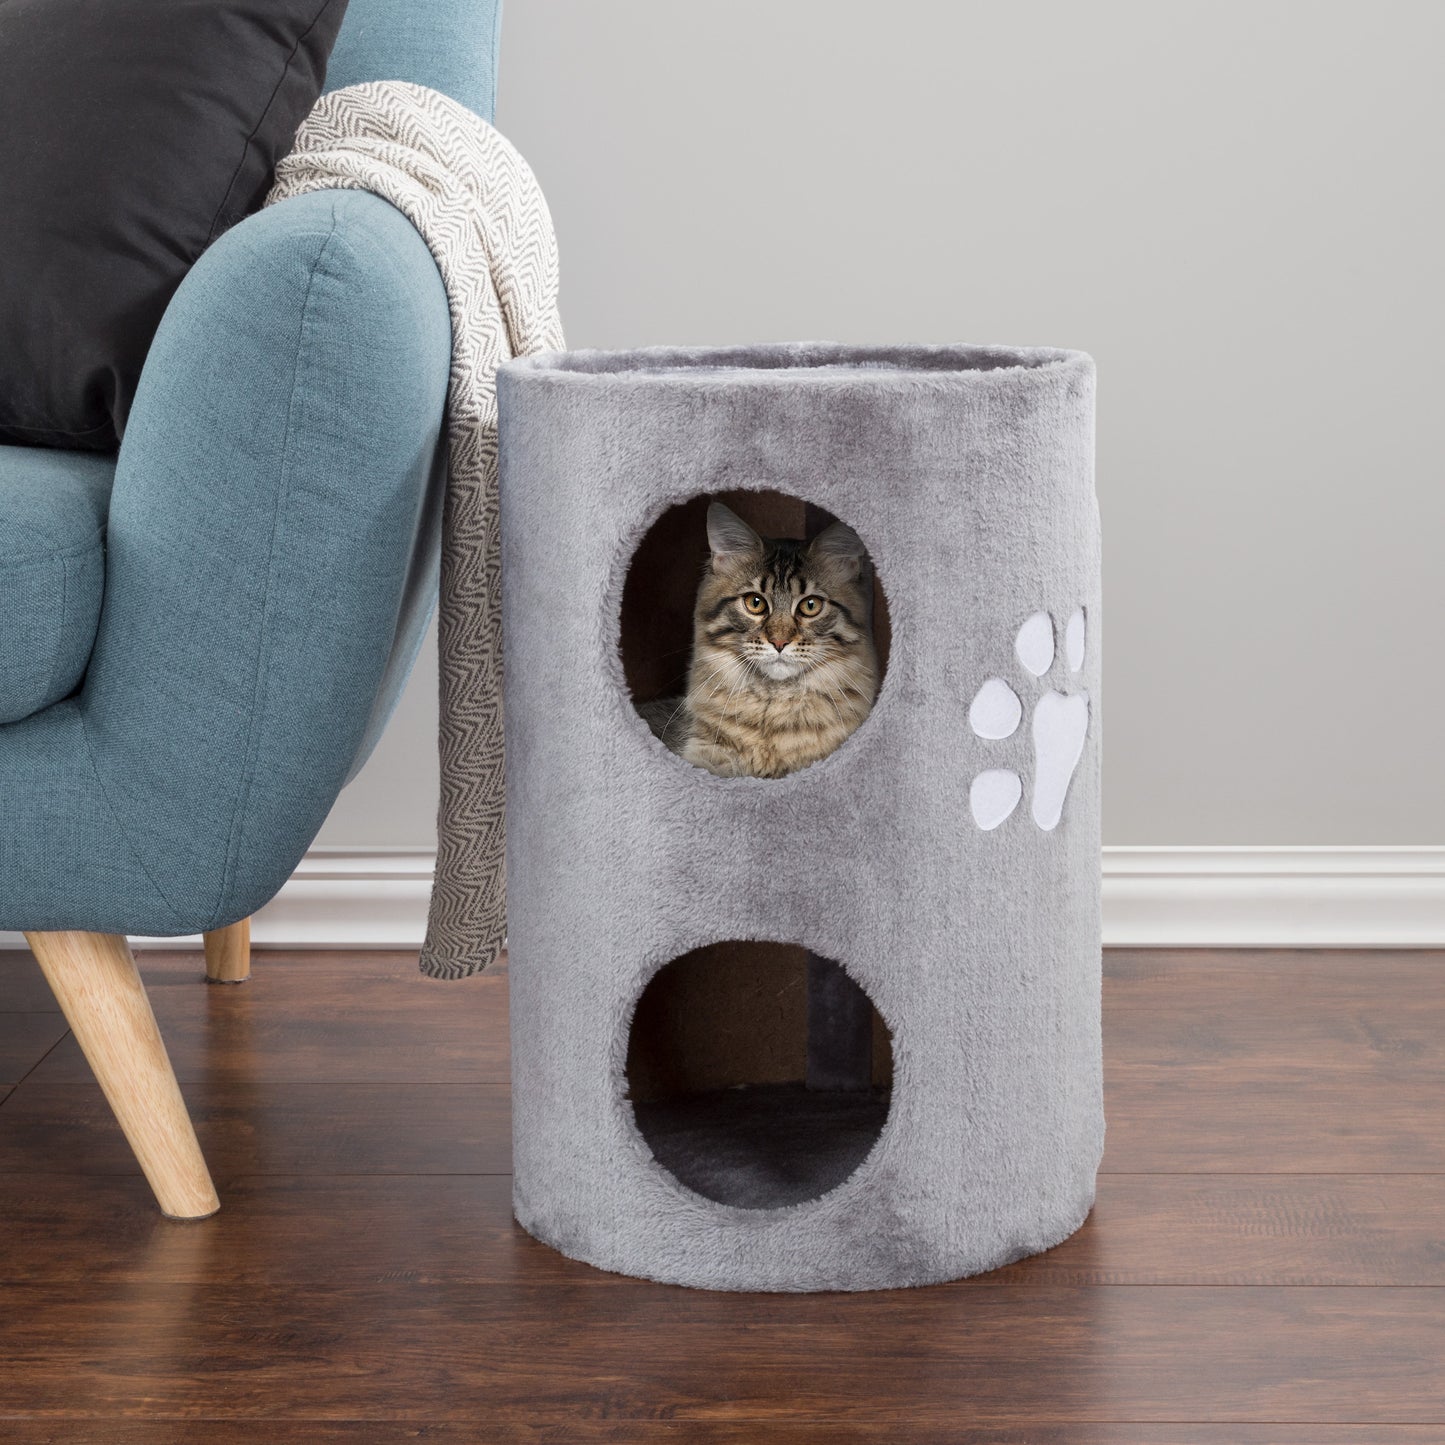 Cat Condo - 2 Story Cat House